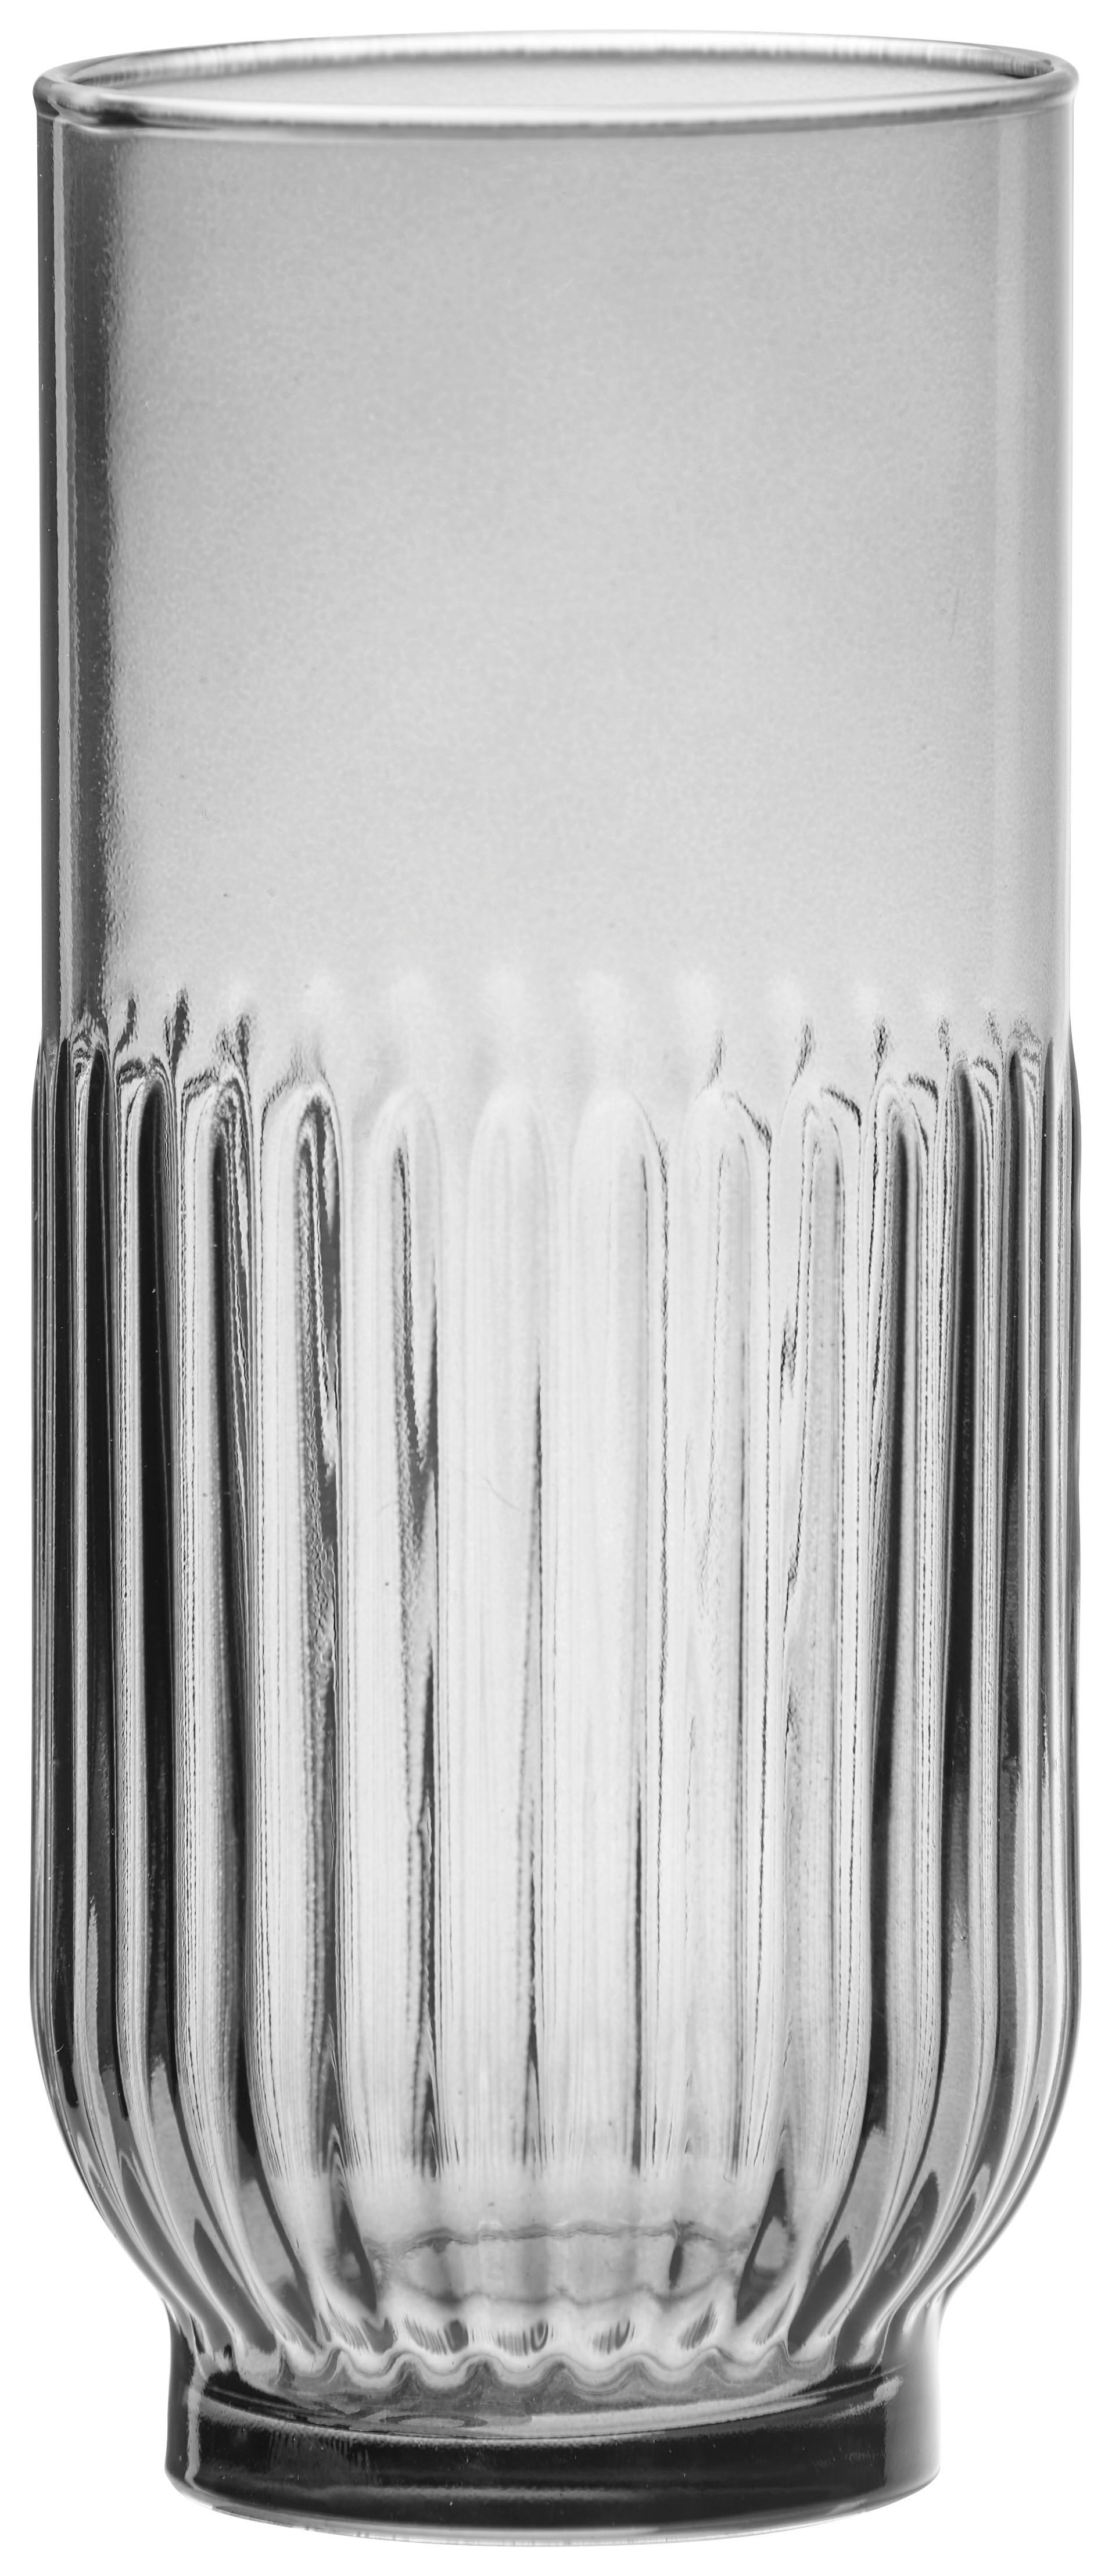 Sklenička Na Longdrink Black Skye - tmavě šedá, Moderní, sklo (6,5/15cm) - Premium Living